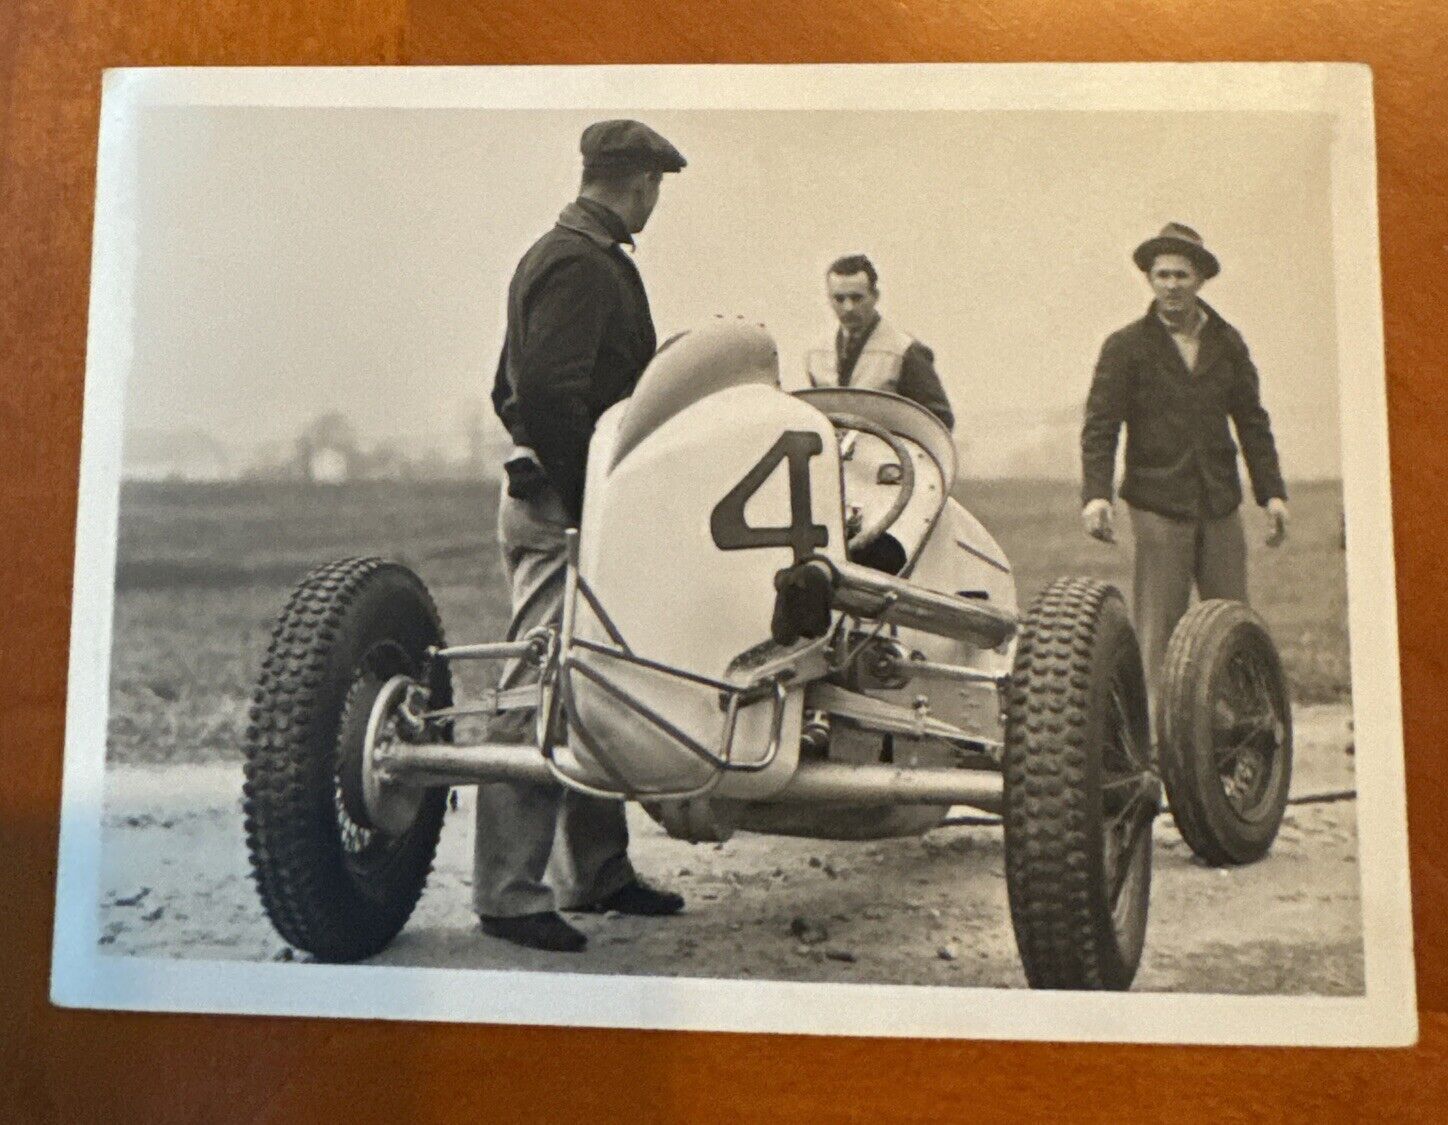 Vintage 1940s Auto Race Photo Print on Cardstock, 5x7